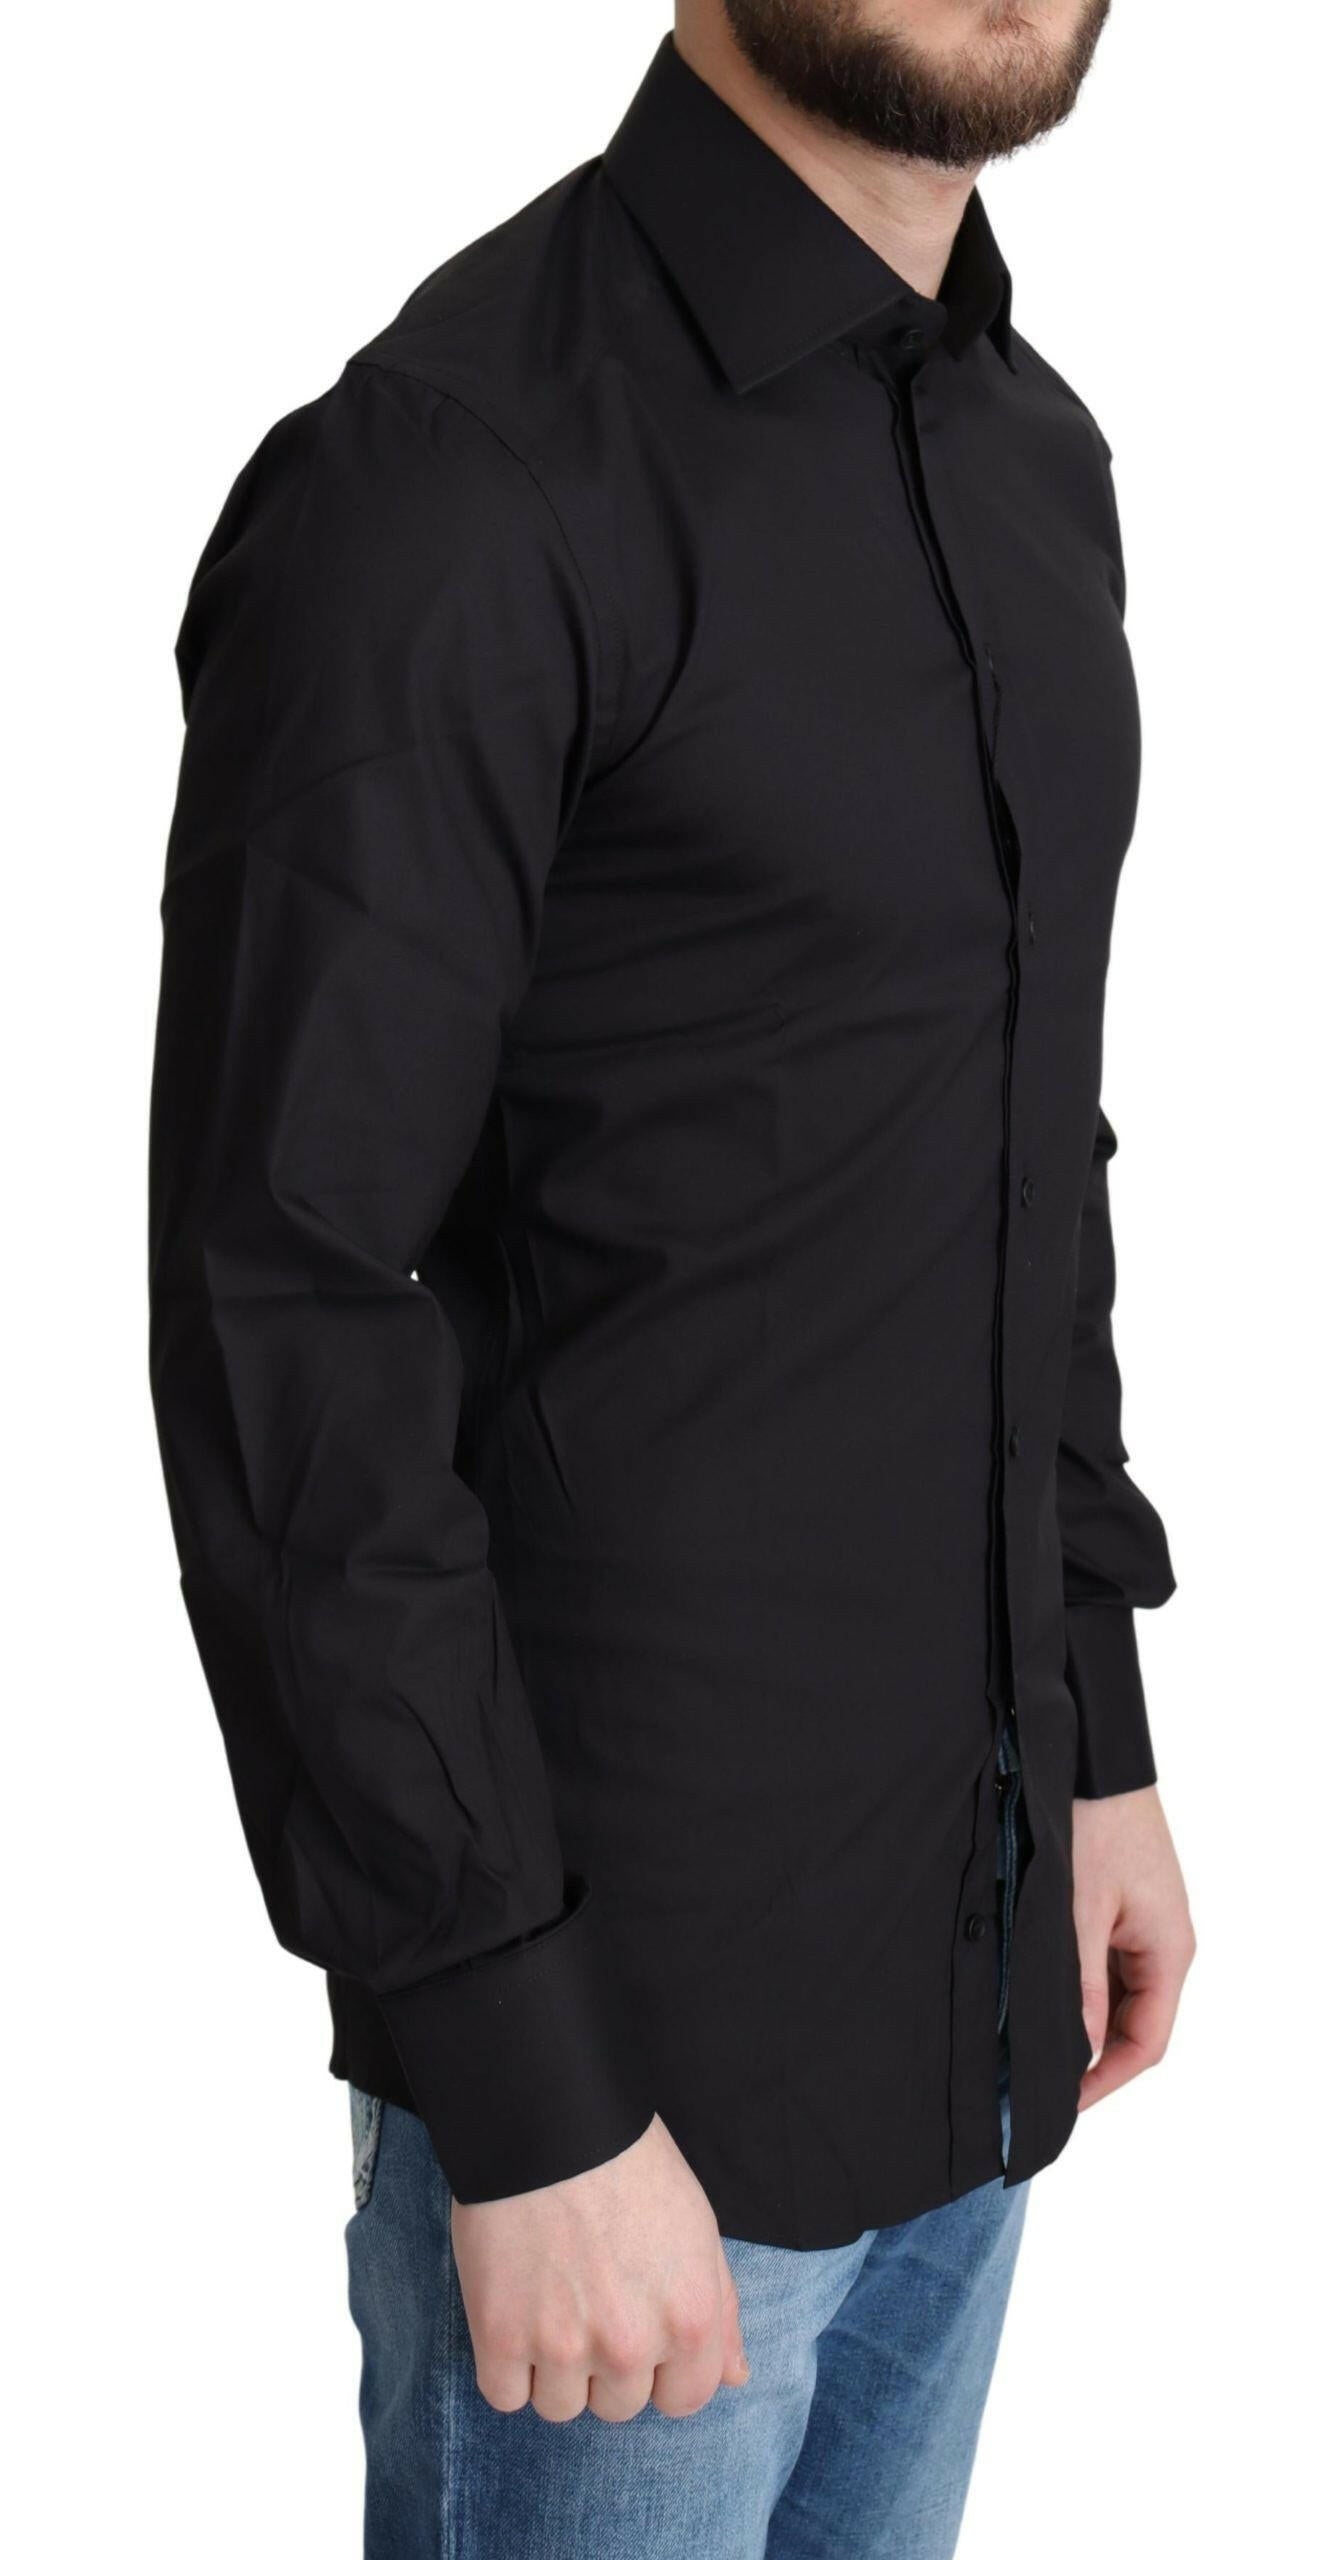 Dolce & Gabbana Black Cotton Blend Formal Dress Shirt - GENUINE AUTHENTIC BRAND LLC  